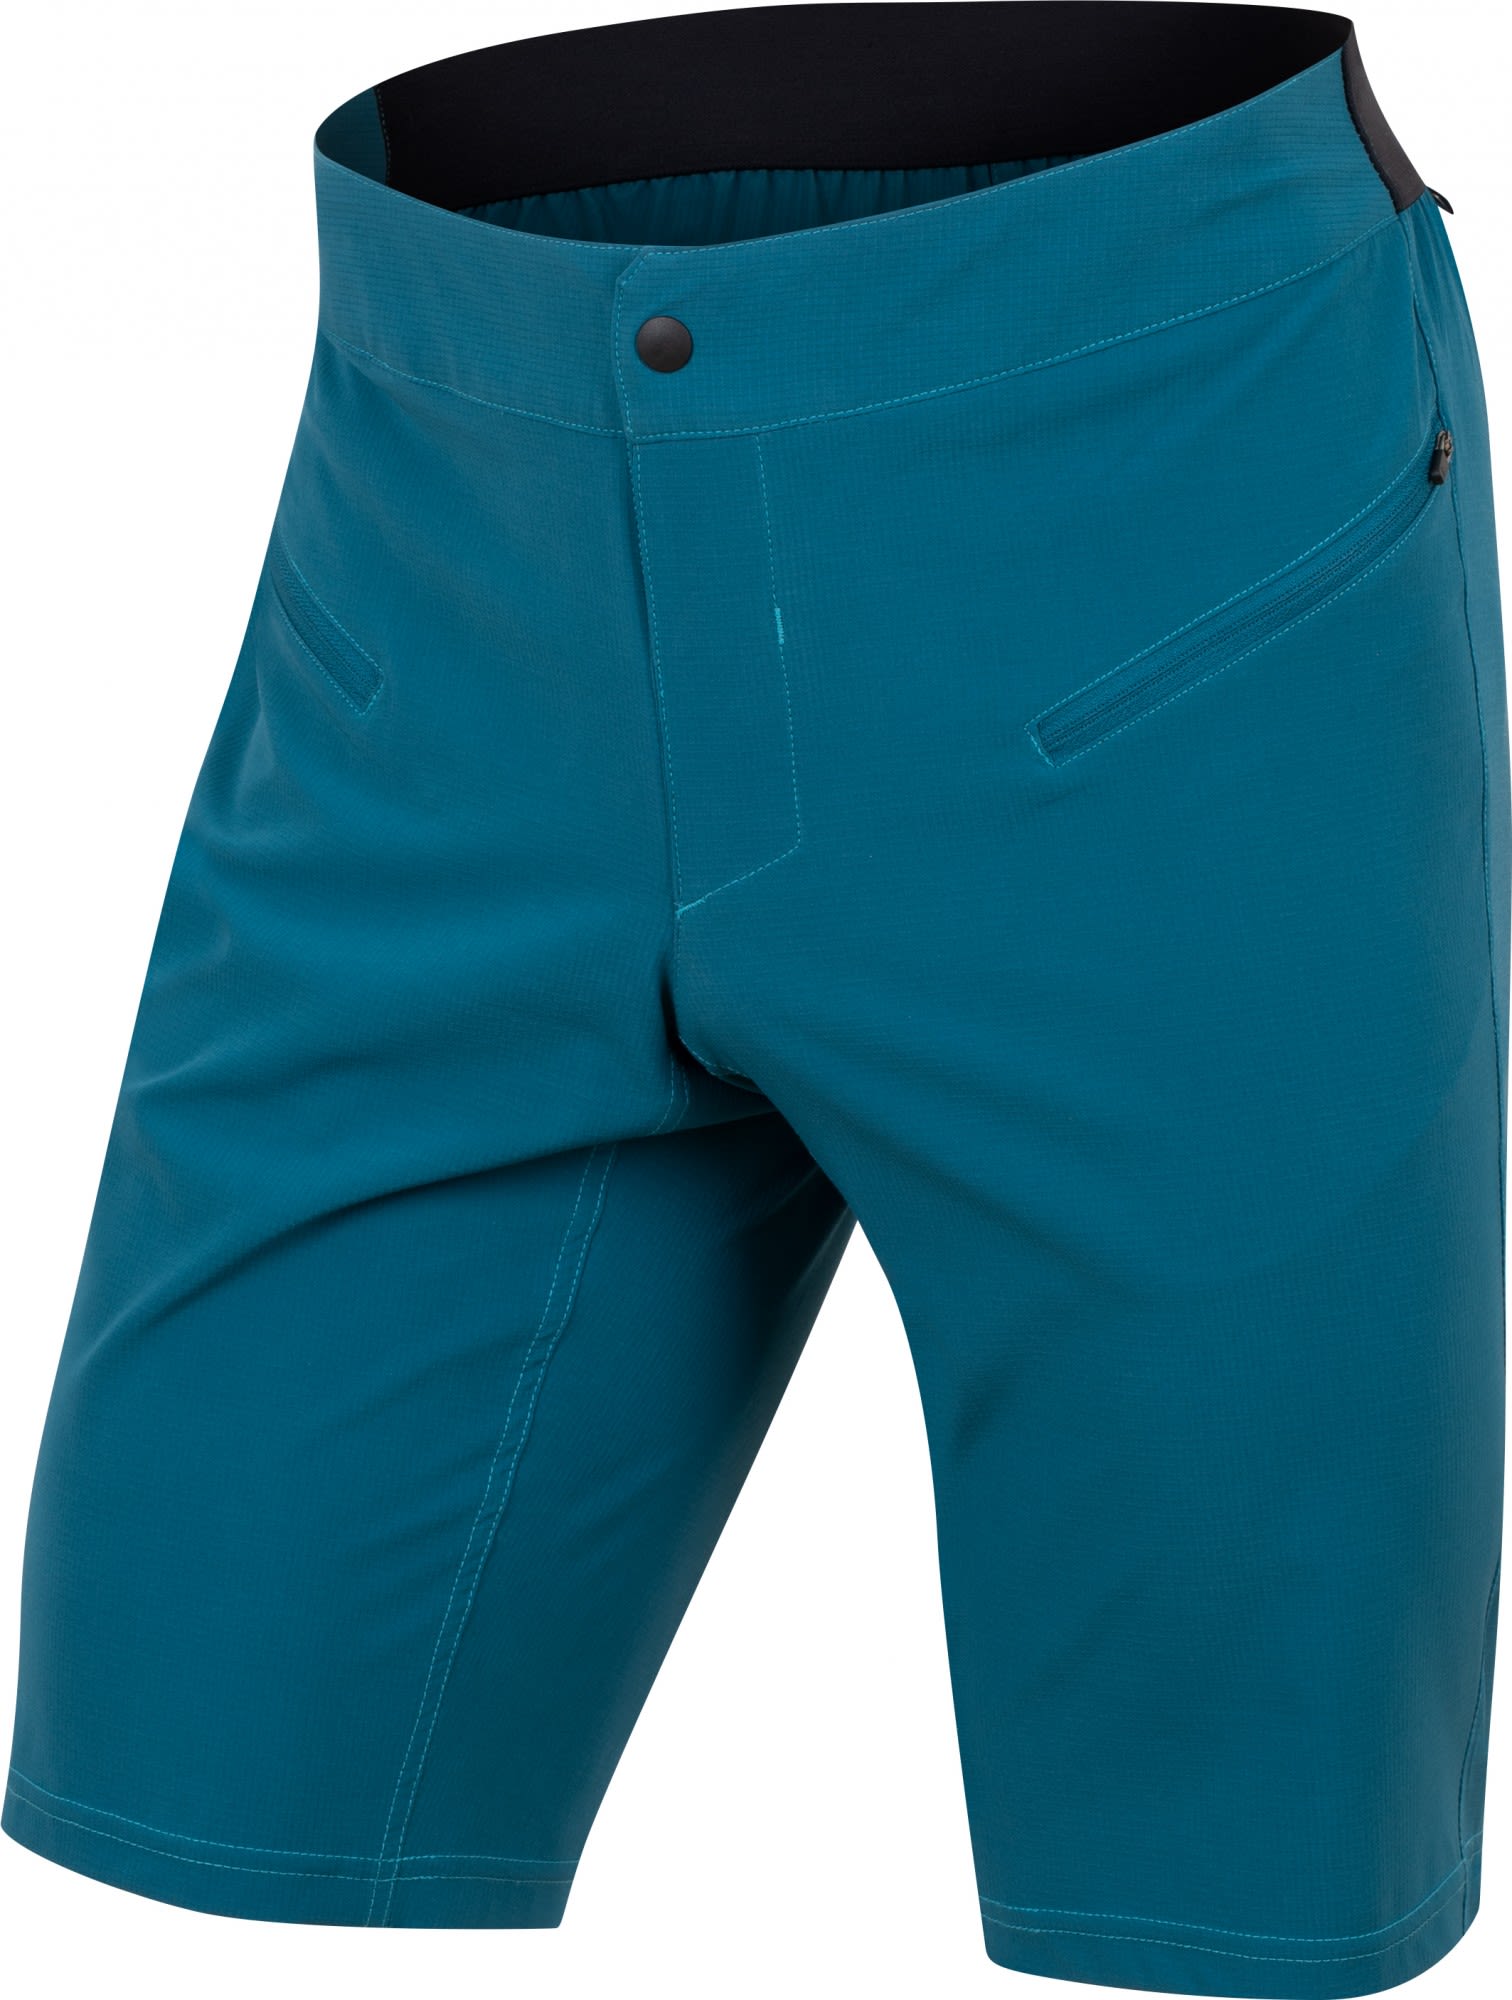 Pearl iZumi M Canyon Short W/ Liner Blau | Größe 36 | Herren Shorts